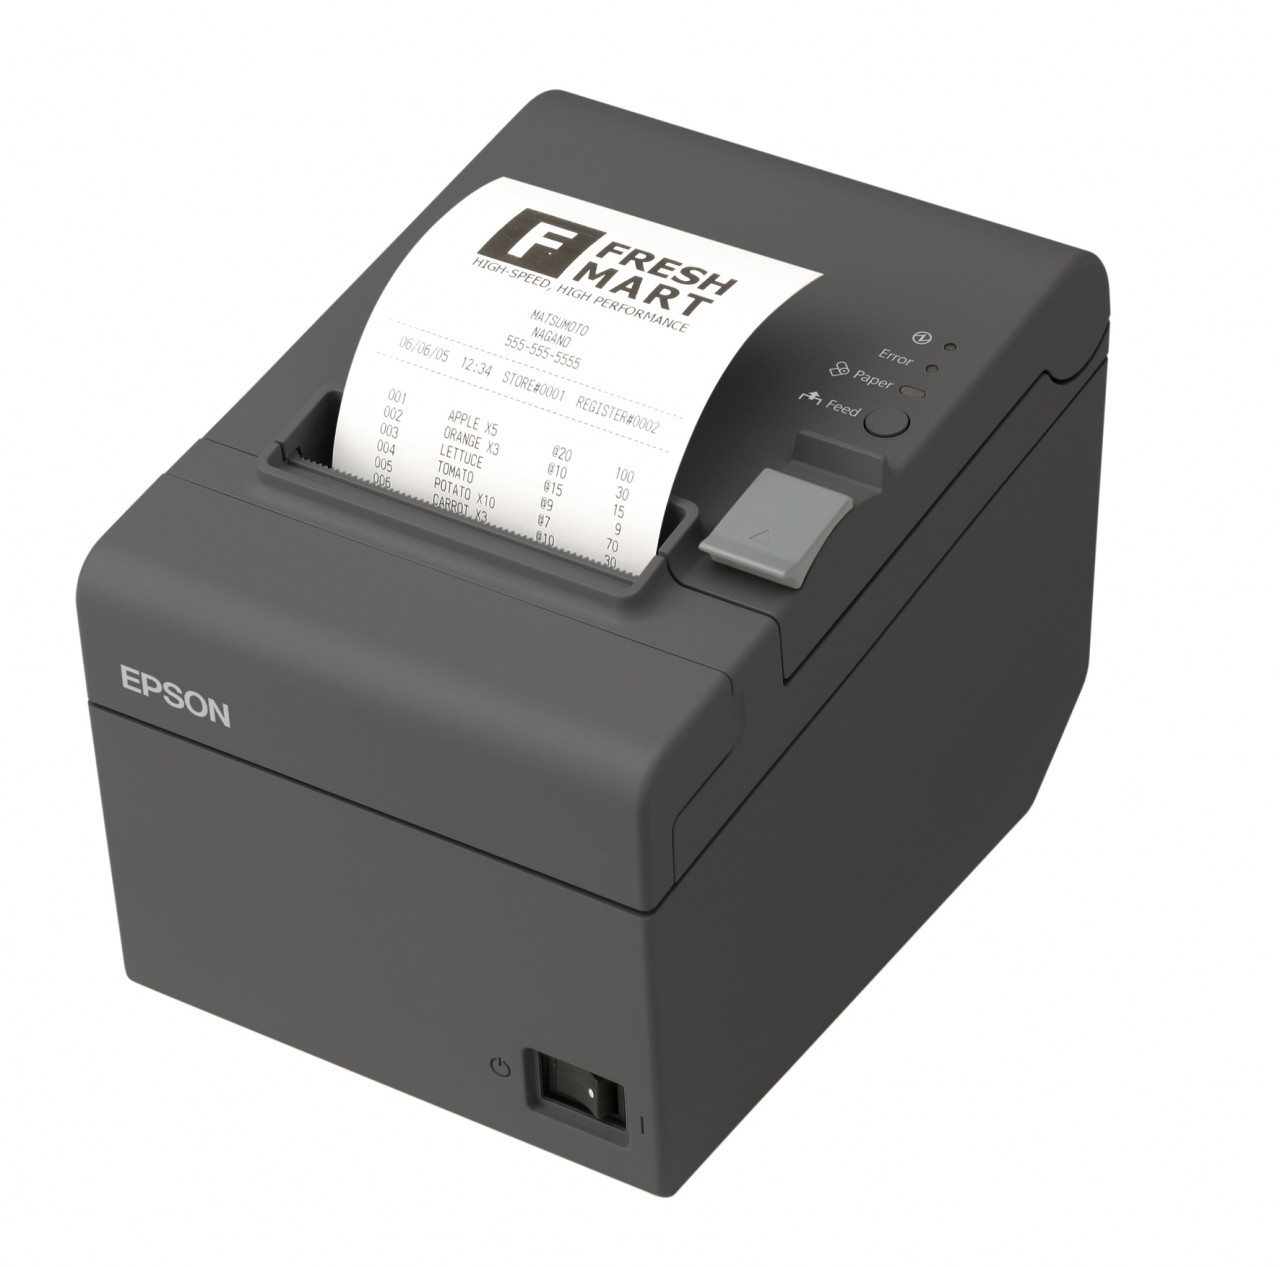 Receipt printer margins problem with Document Printer - V5